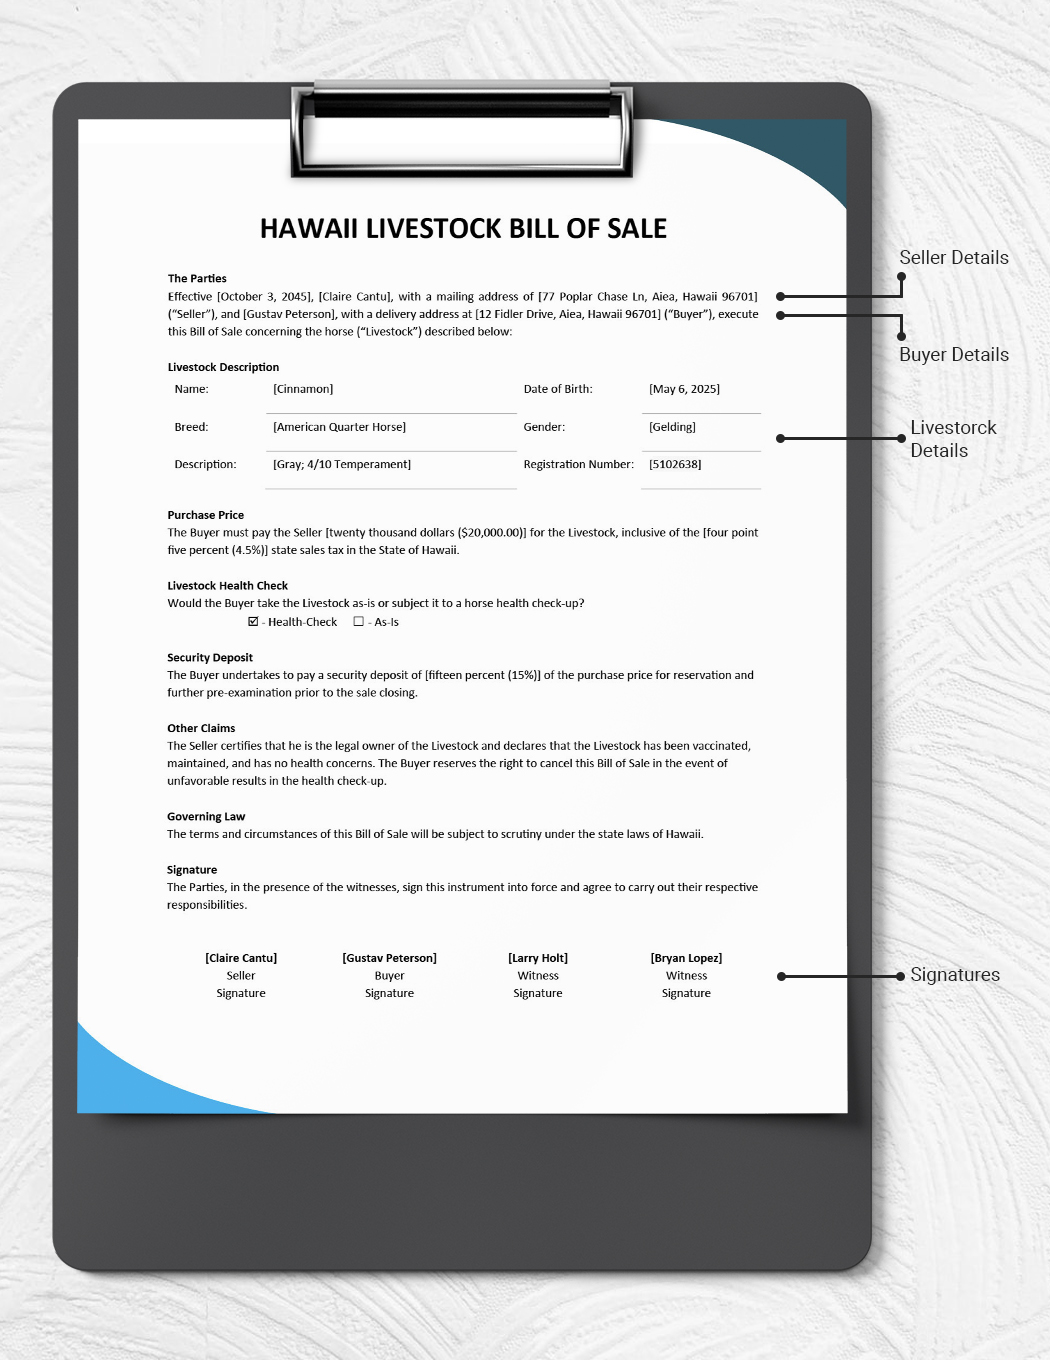 Hawaii Livestock Bill of Sale Template